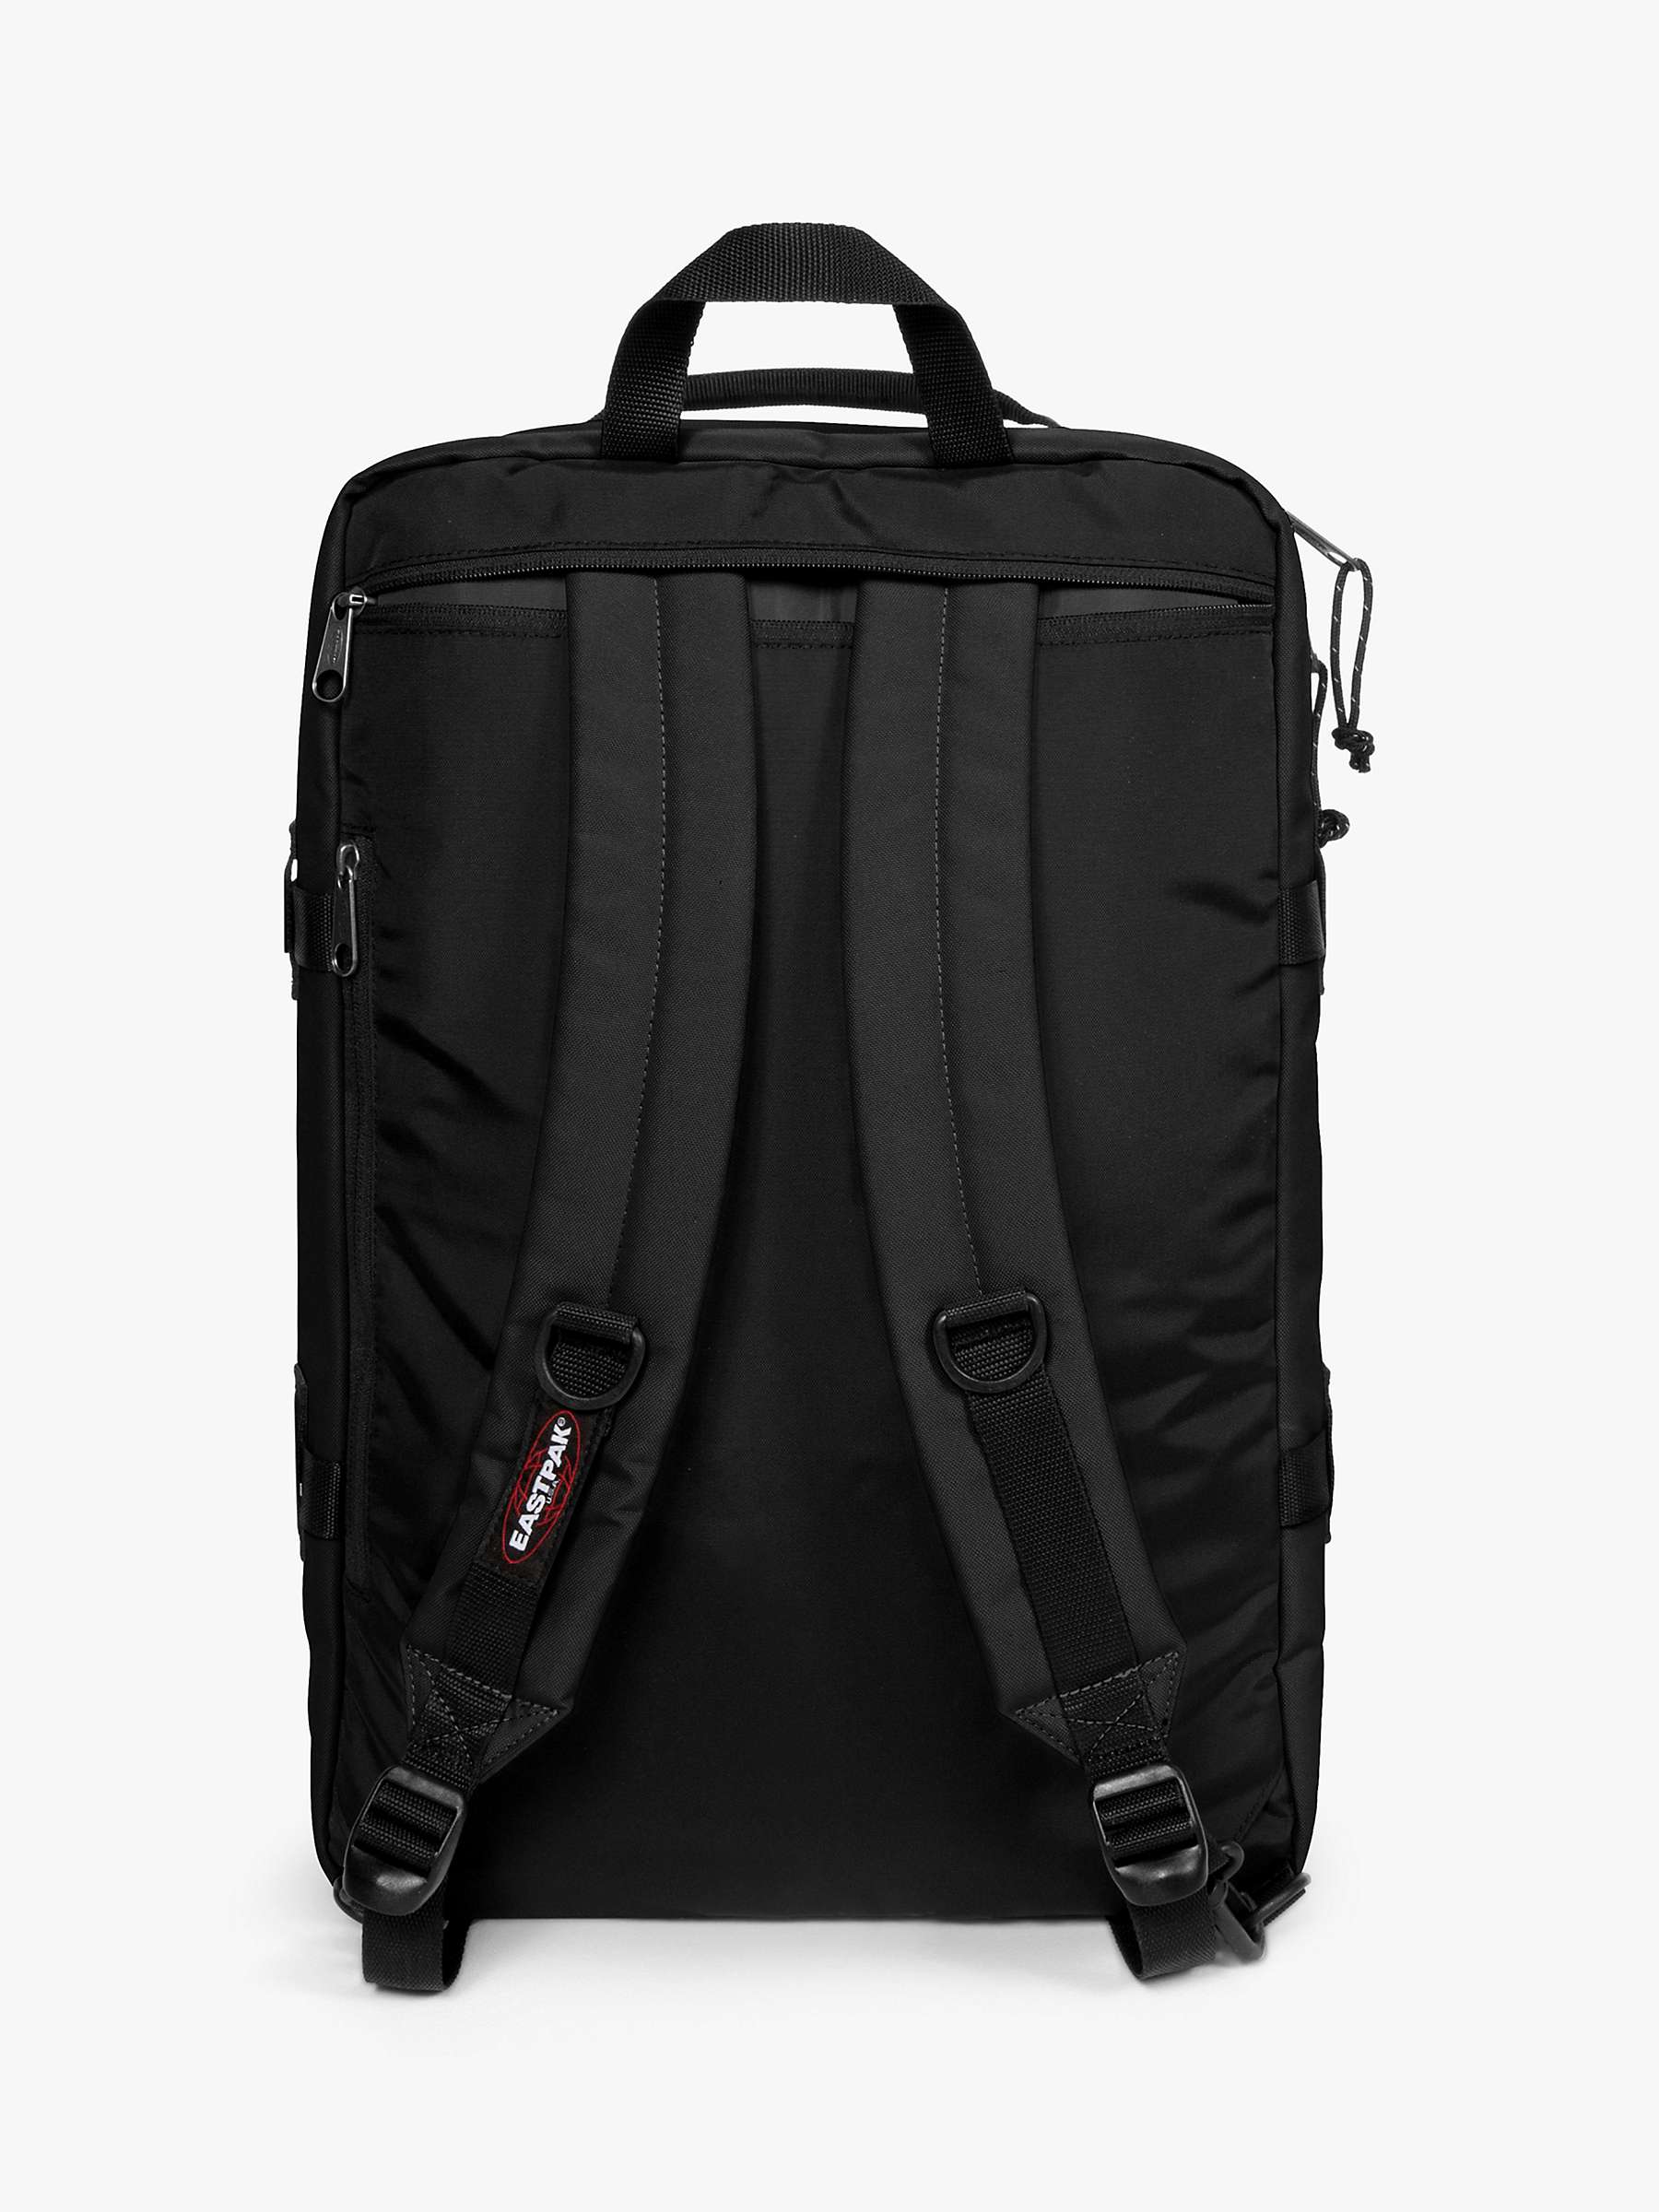 Buy Eastpak 2-in-1 TravelPack Backpack Online at johnlewis.com